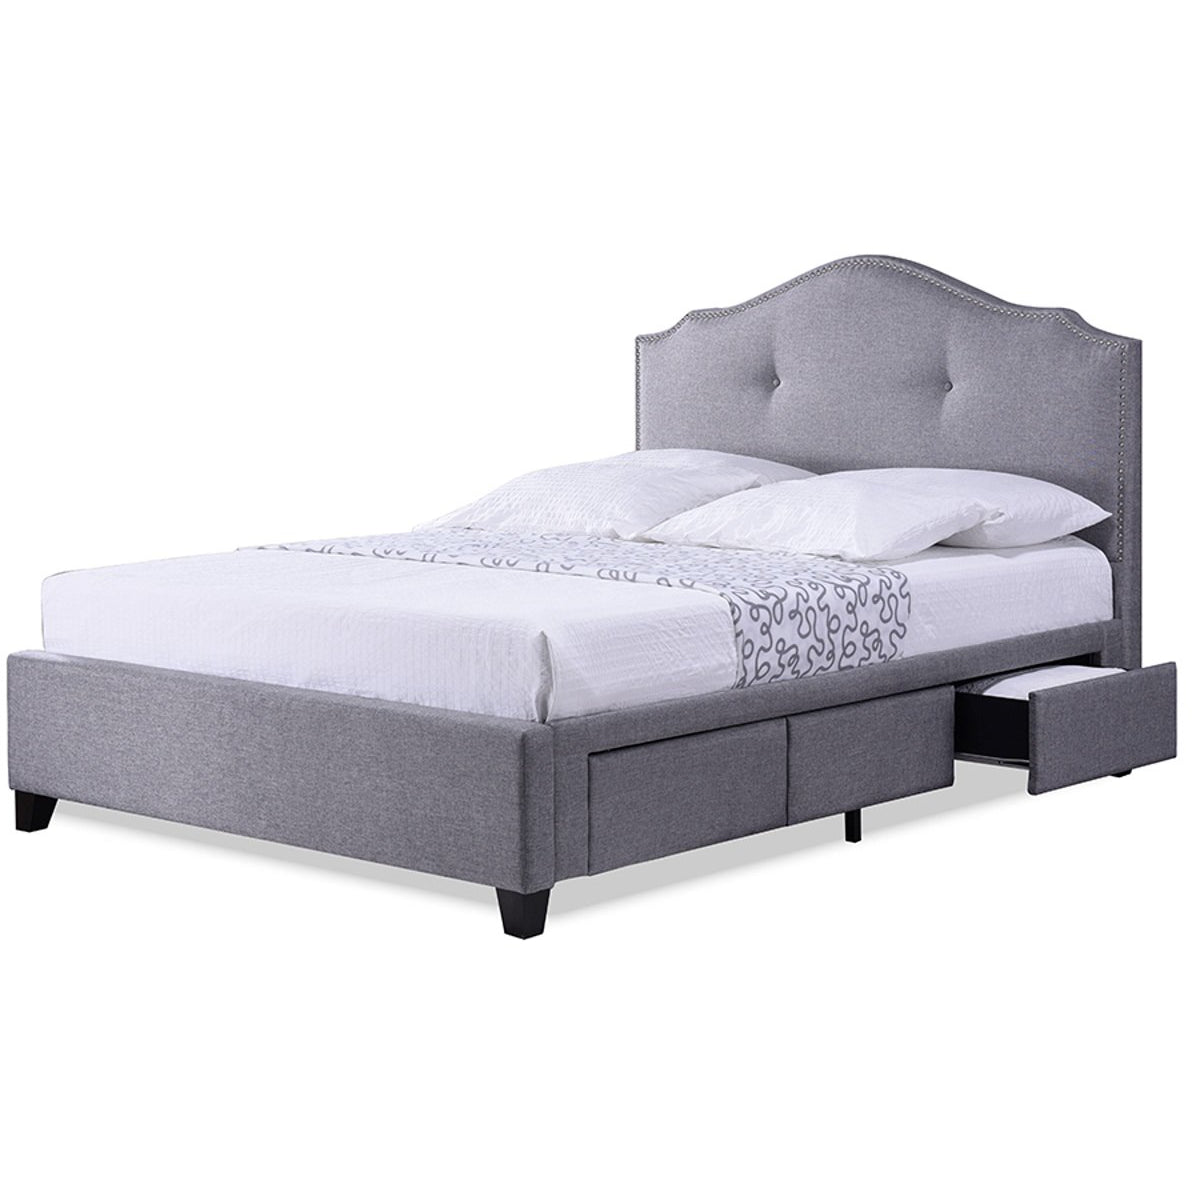 Baxton Studio Armeena Grey Linen Modern Storage Bed with Upholstered Headboard - Queen Size Baxton Studio-beds-Minimal And Modern - 1